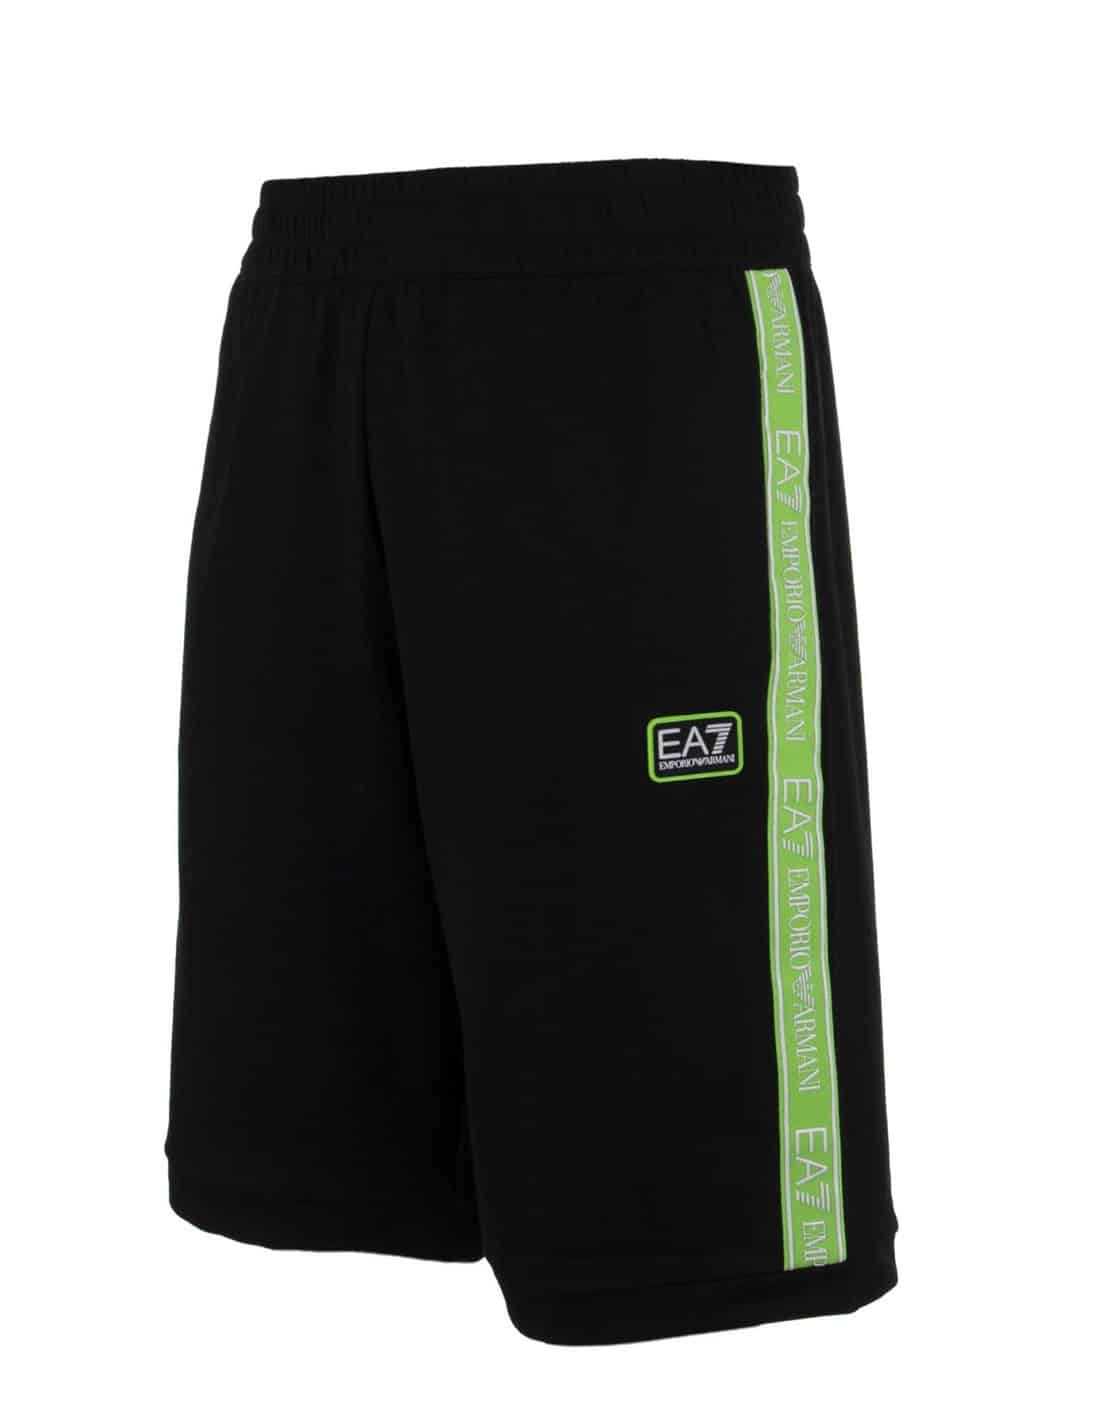 Armani EA7 Short With Logotape Black/Green